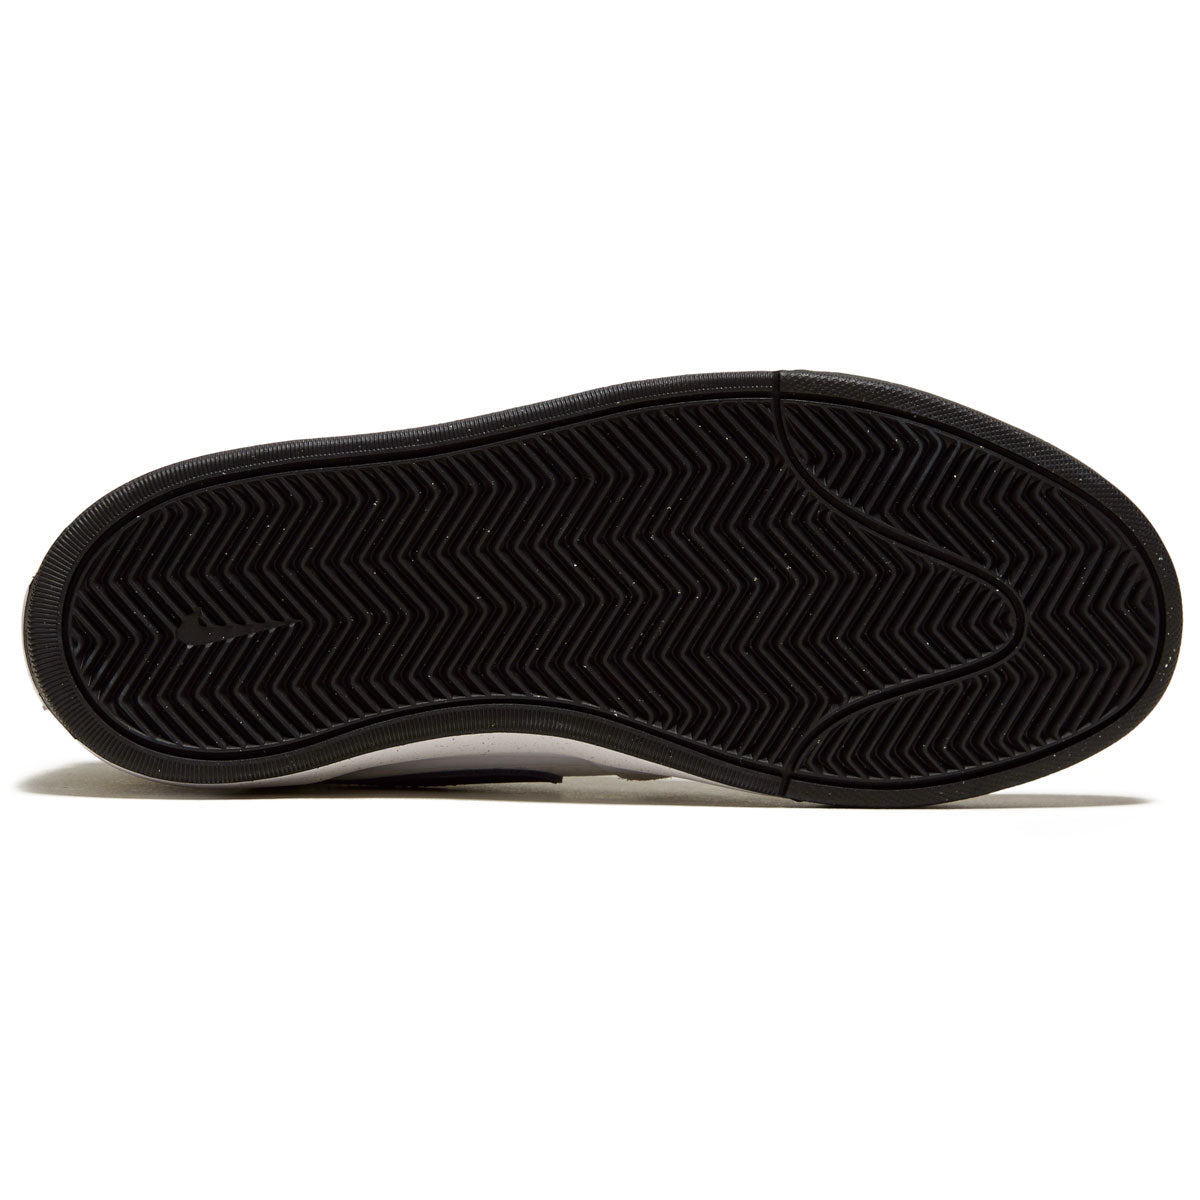 Nike SB React Leo Shoes - White/Black image 4